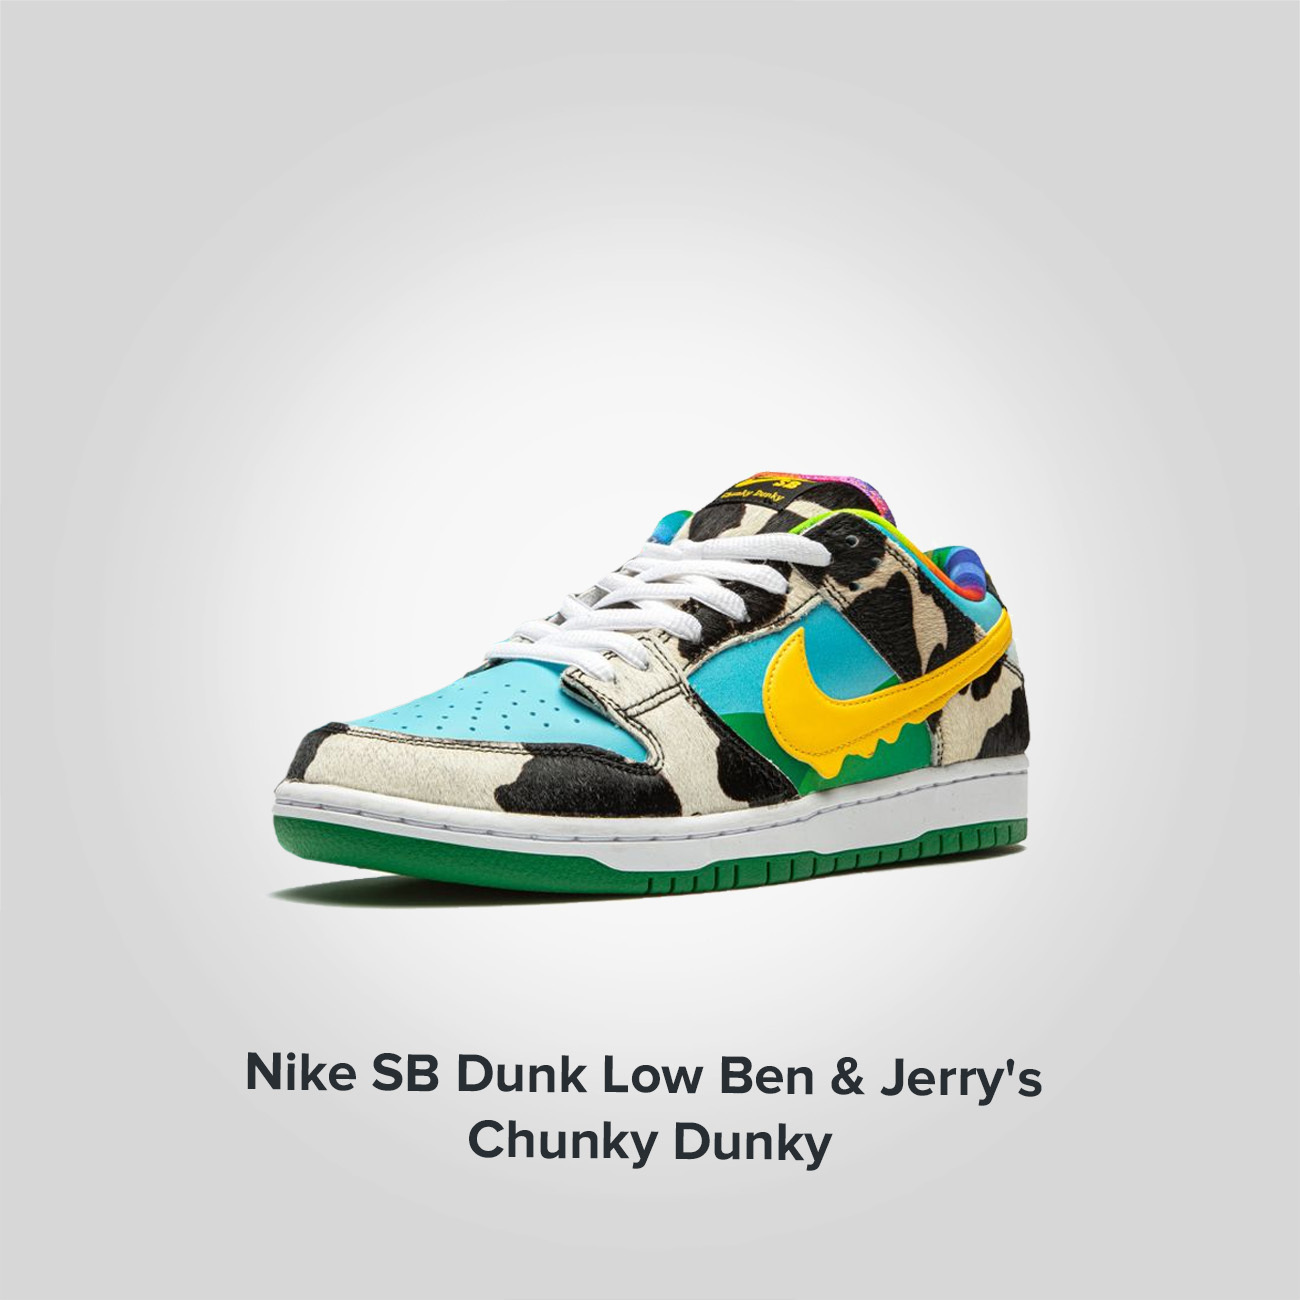 Ben & Jerry's x Nike SB Dunk Low Chunky Dunky